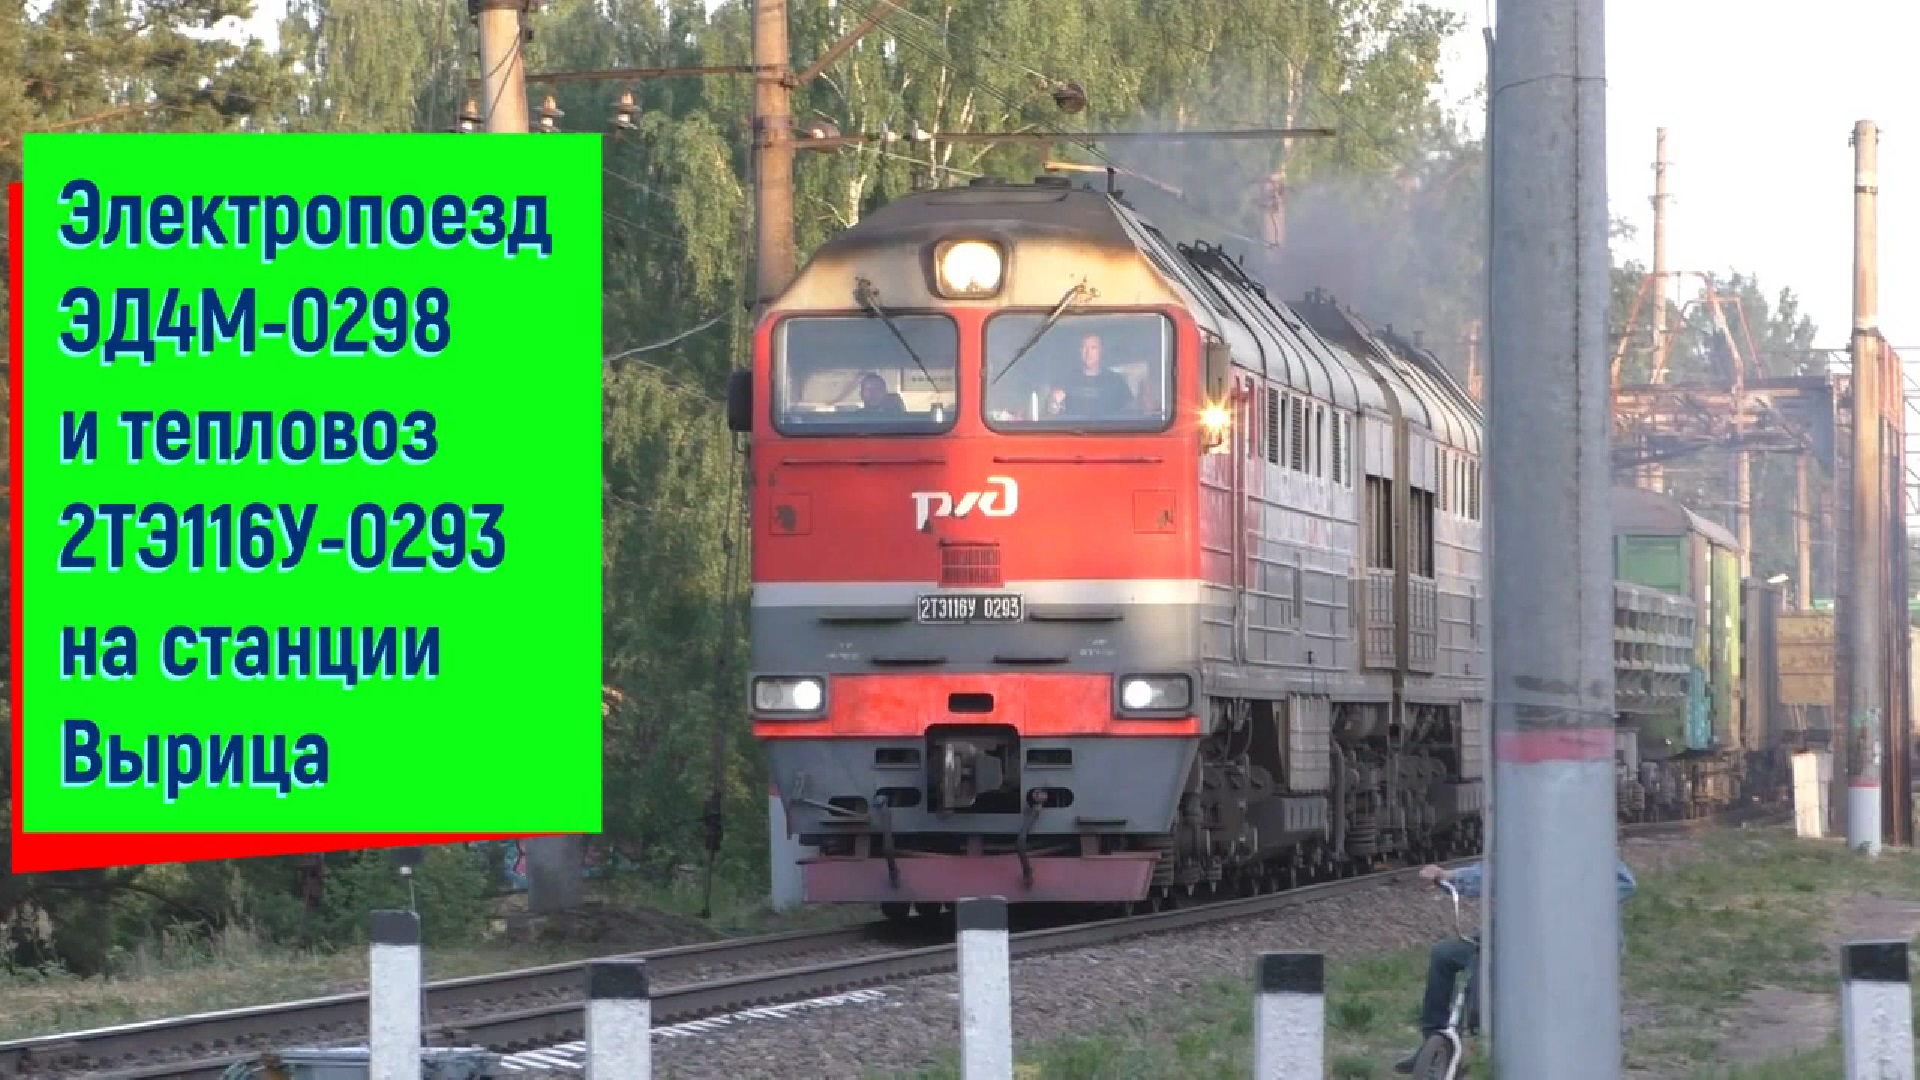 Электропоезд ЭД4М-0298 и 2ТЭ116У-0293, станция Вырица | ED4M-0298 and 2TE116U-0293, Vyritsa station